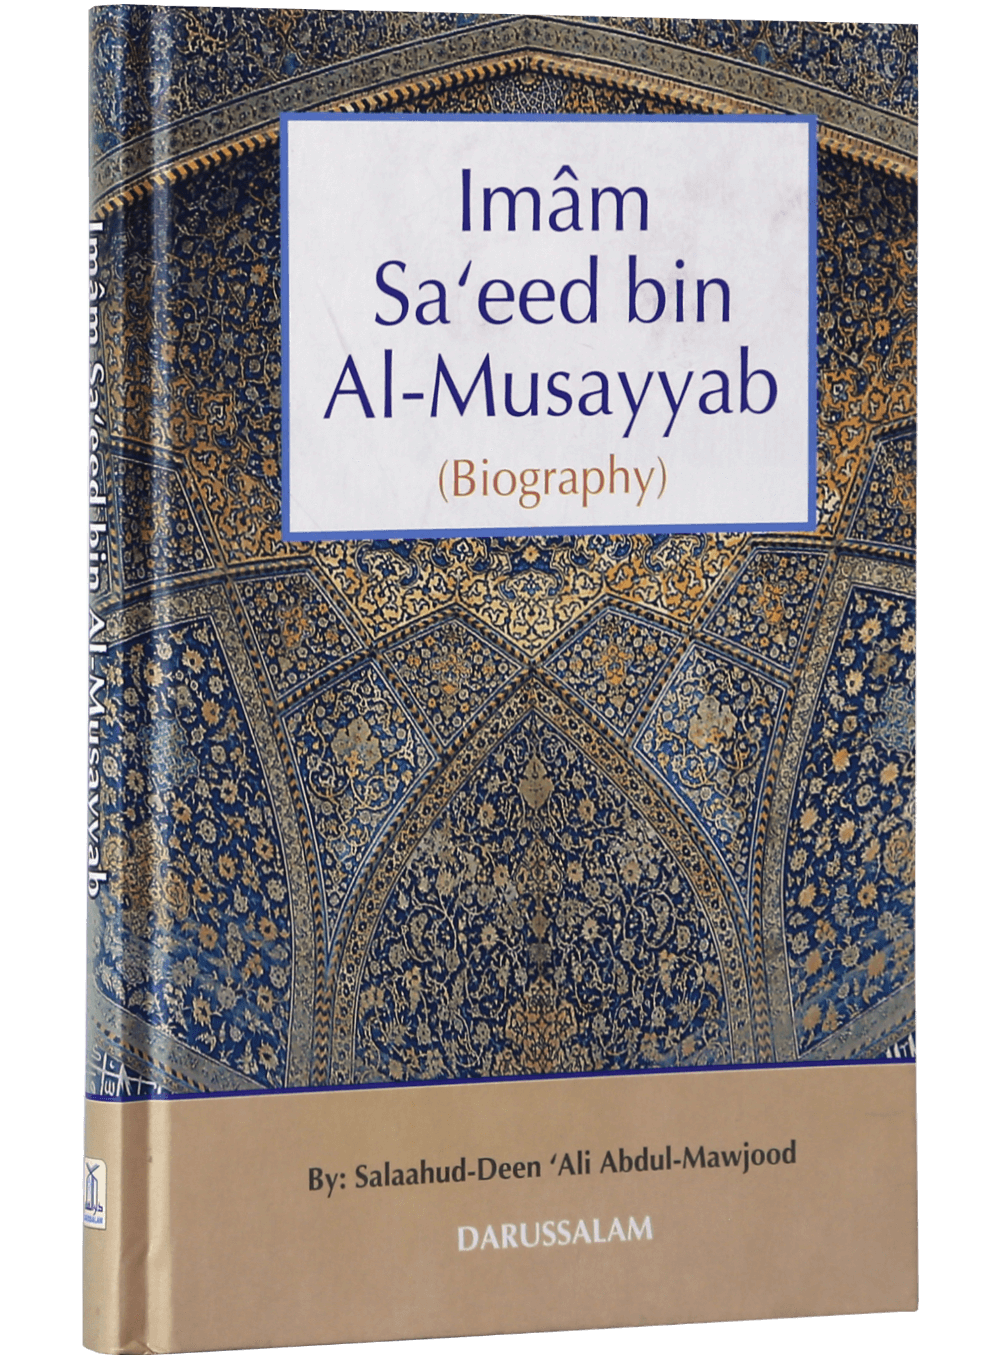 The Biography Of Imam Saeed Bin Al Musayyab